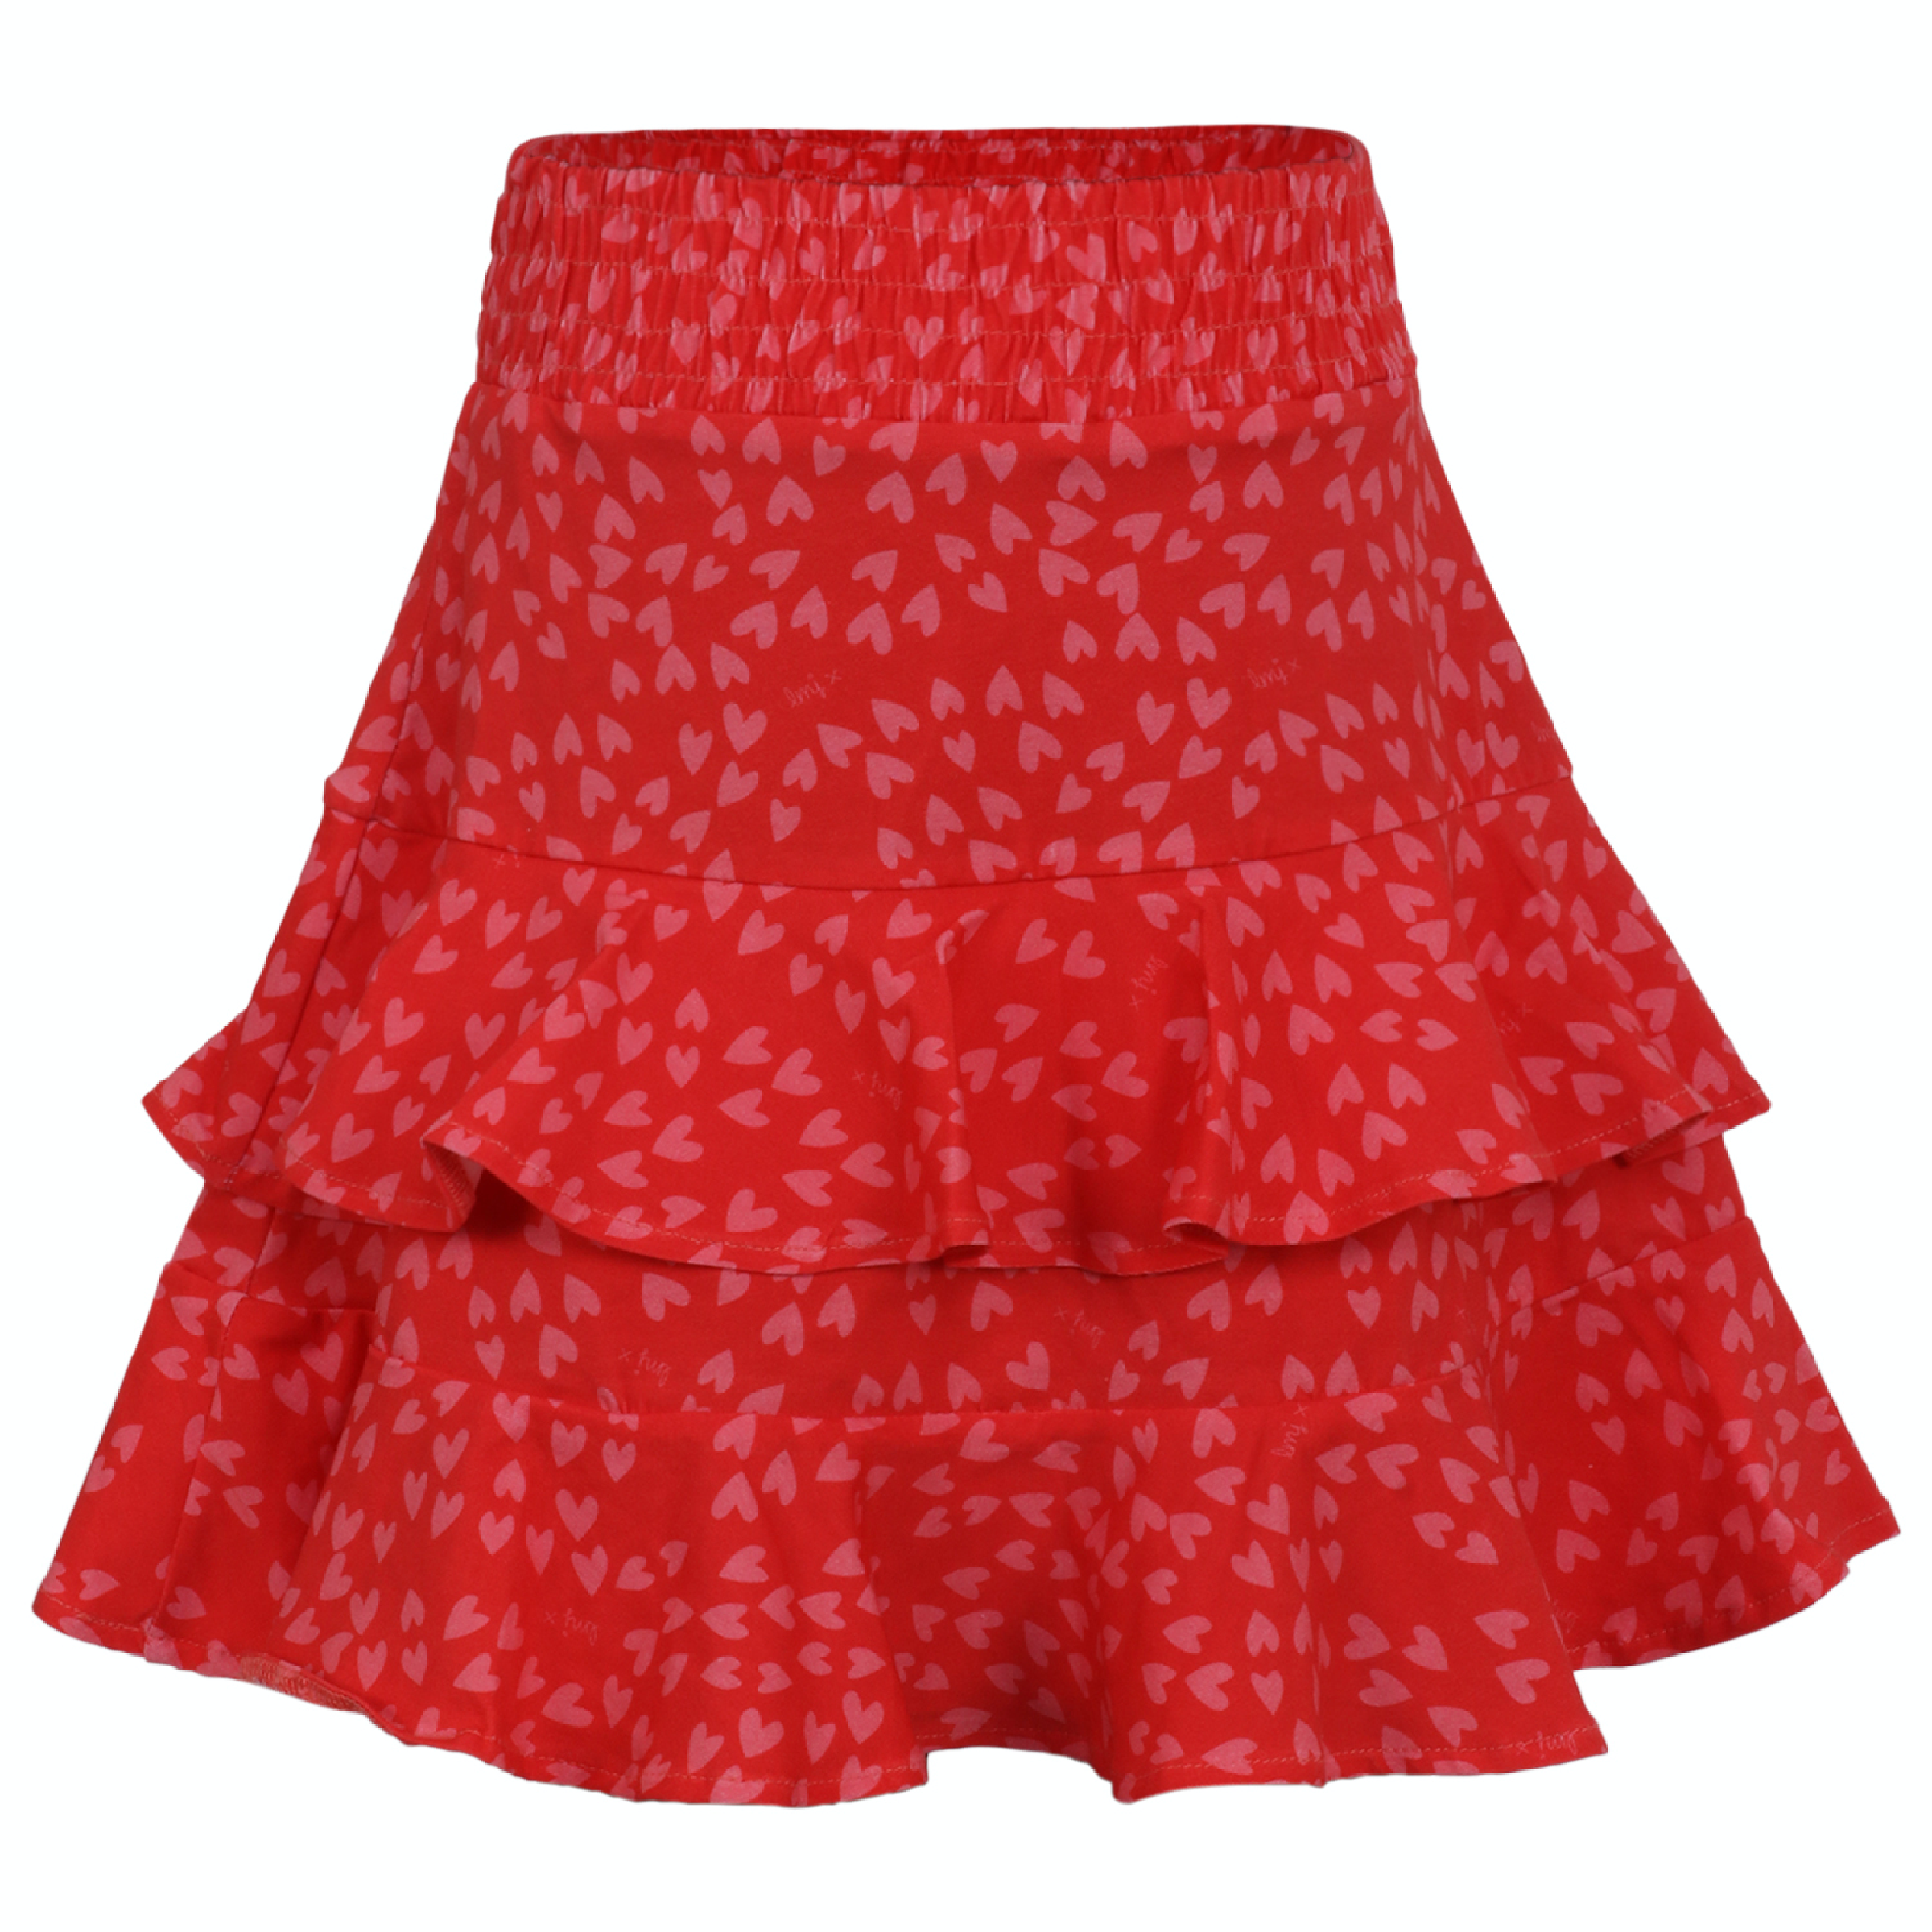 Meisjes Skirt Ruffles van Miss Juliette in de kleur Rood in maat 146, 152.